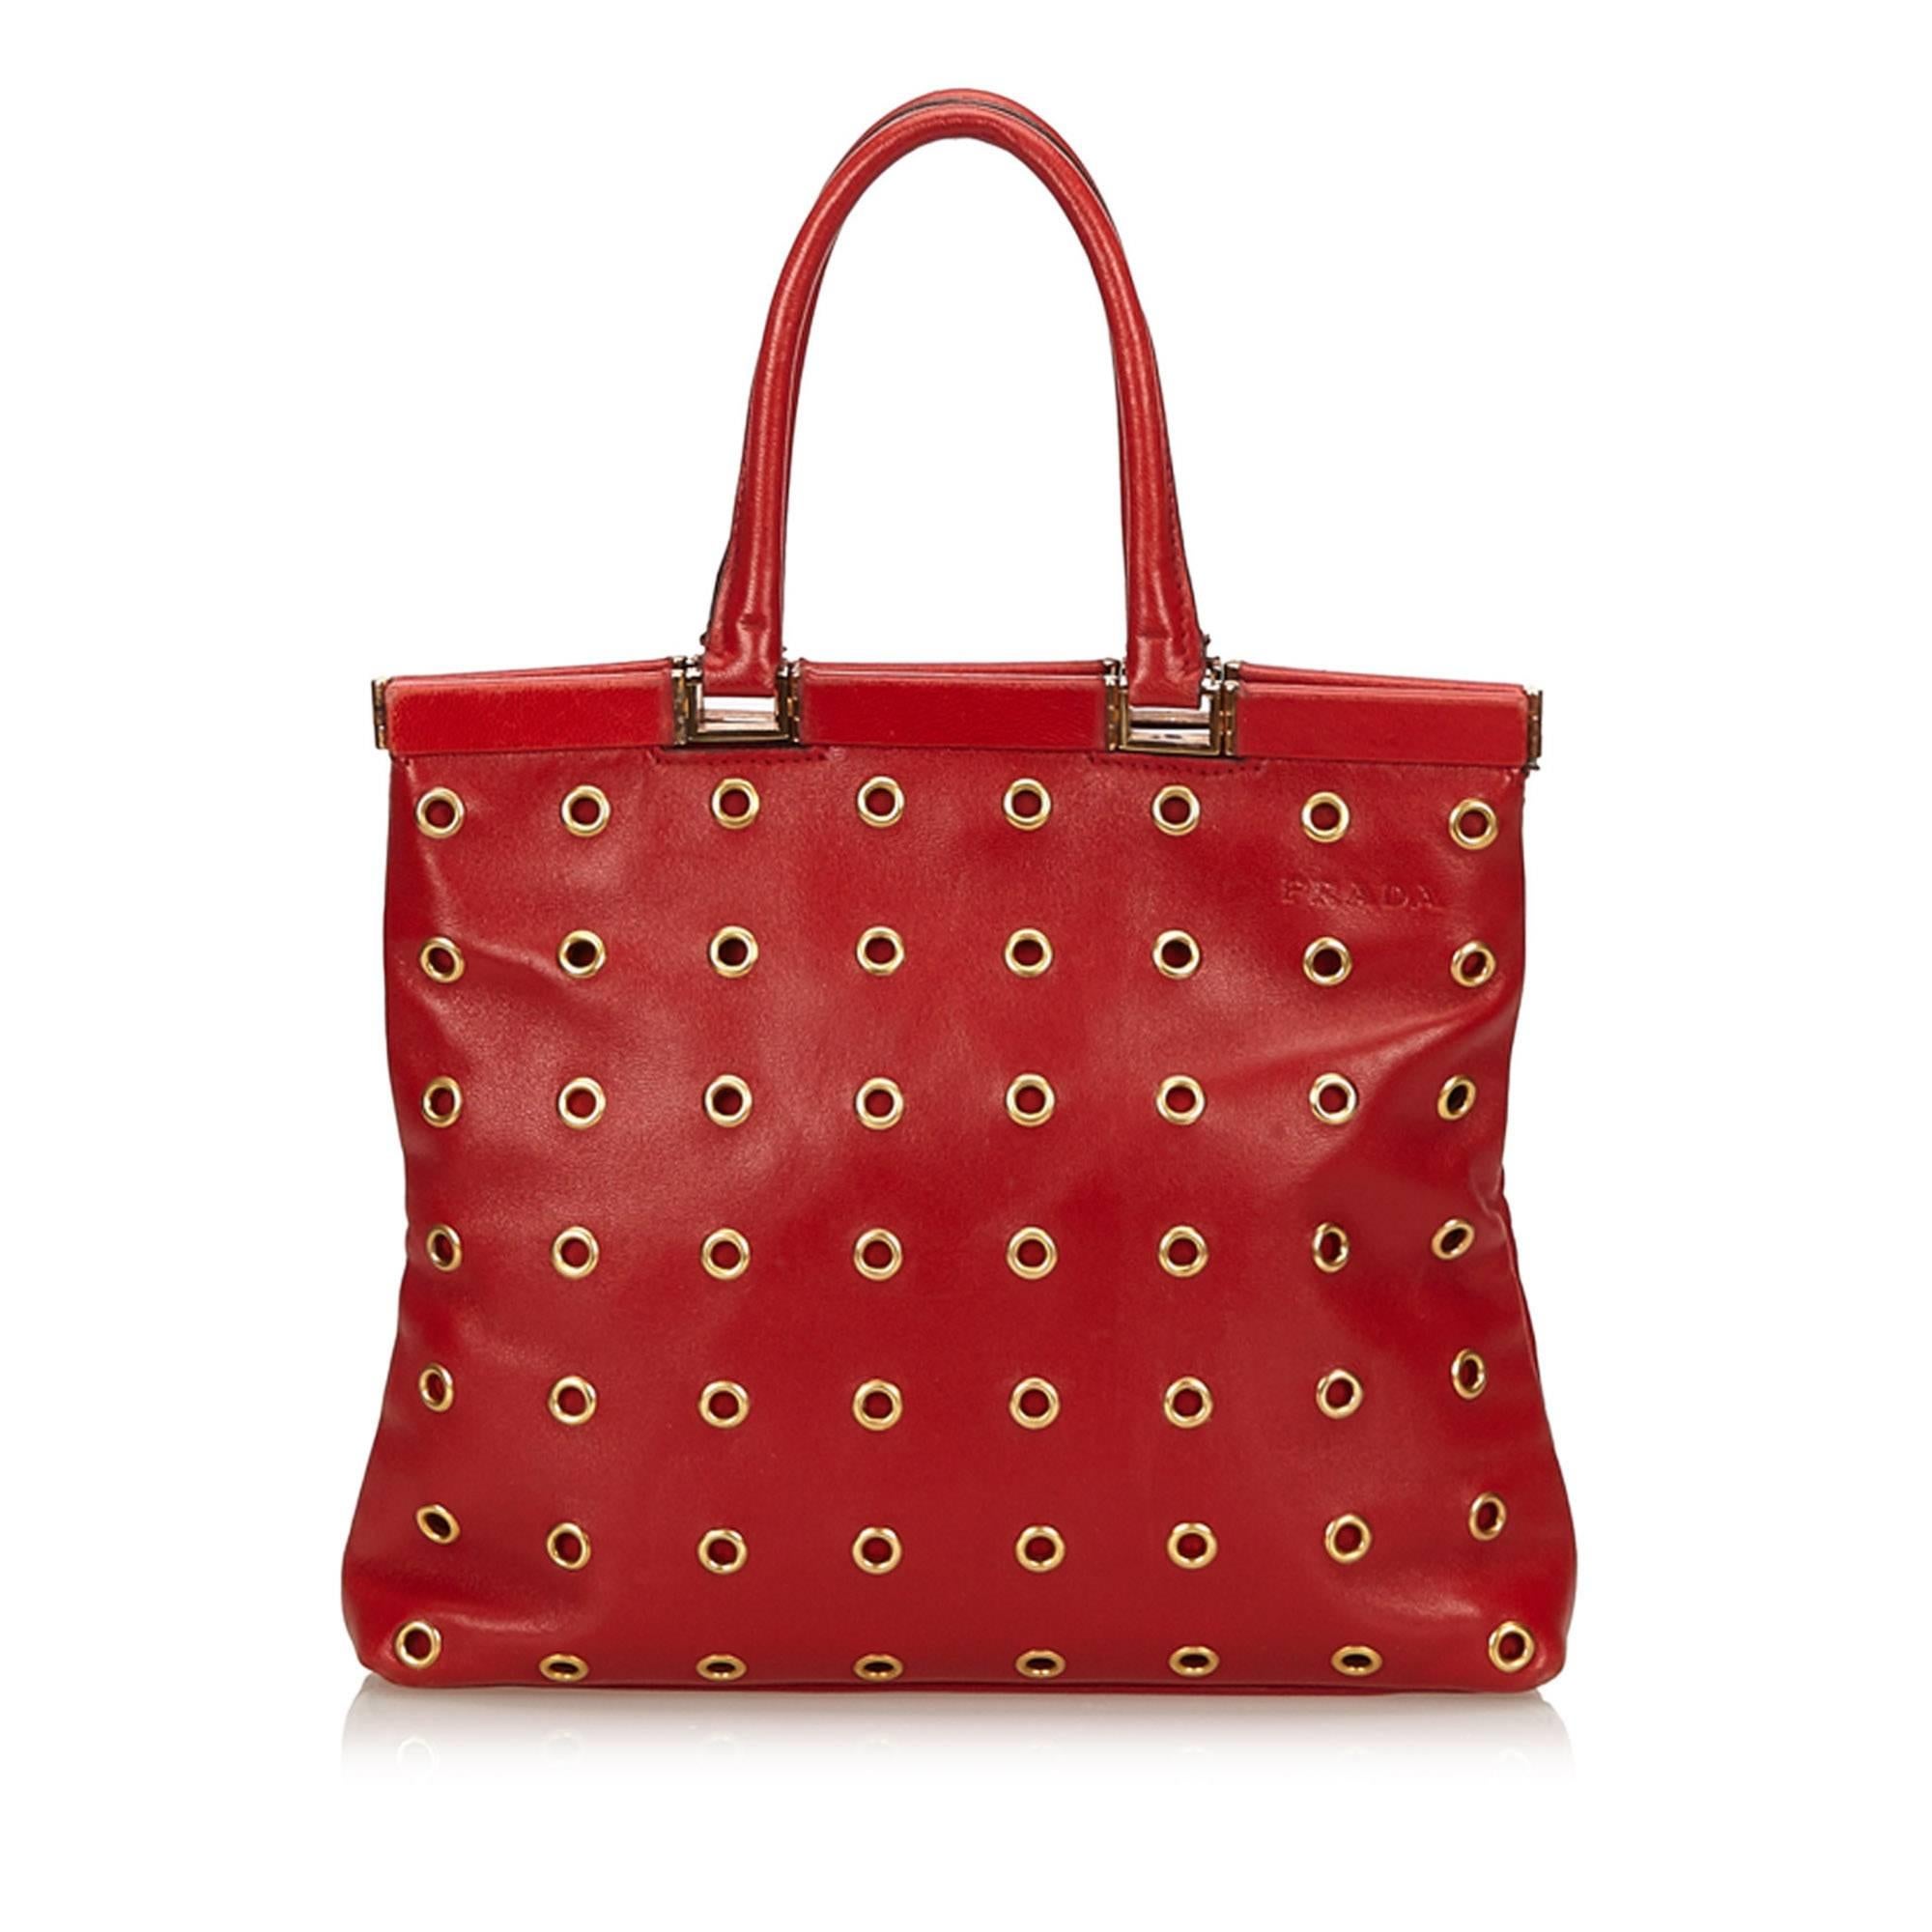 Women's or Men's Prada Red Calf Leather 18 Carat Gold-Toned Eyelet Handbag